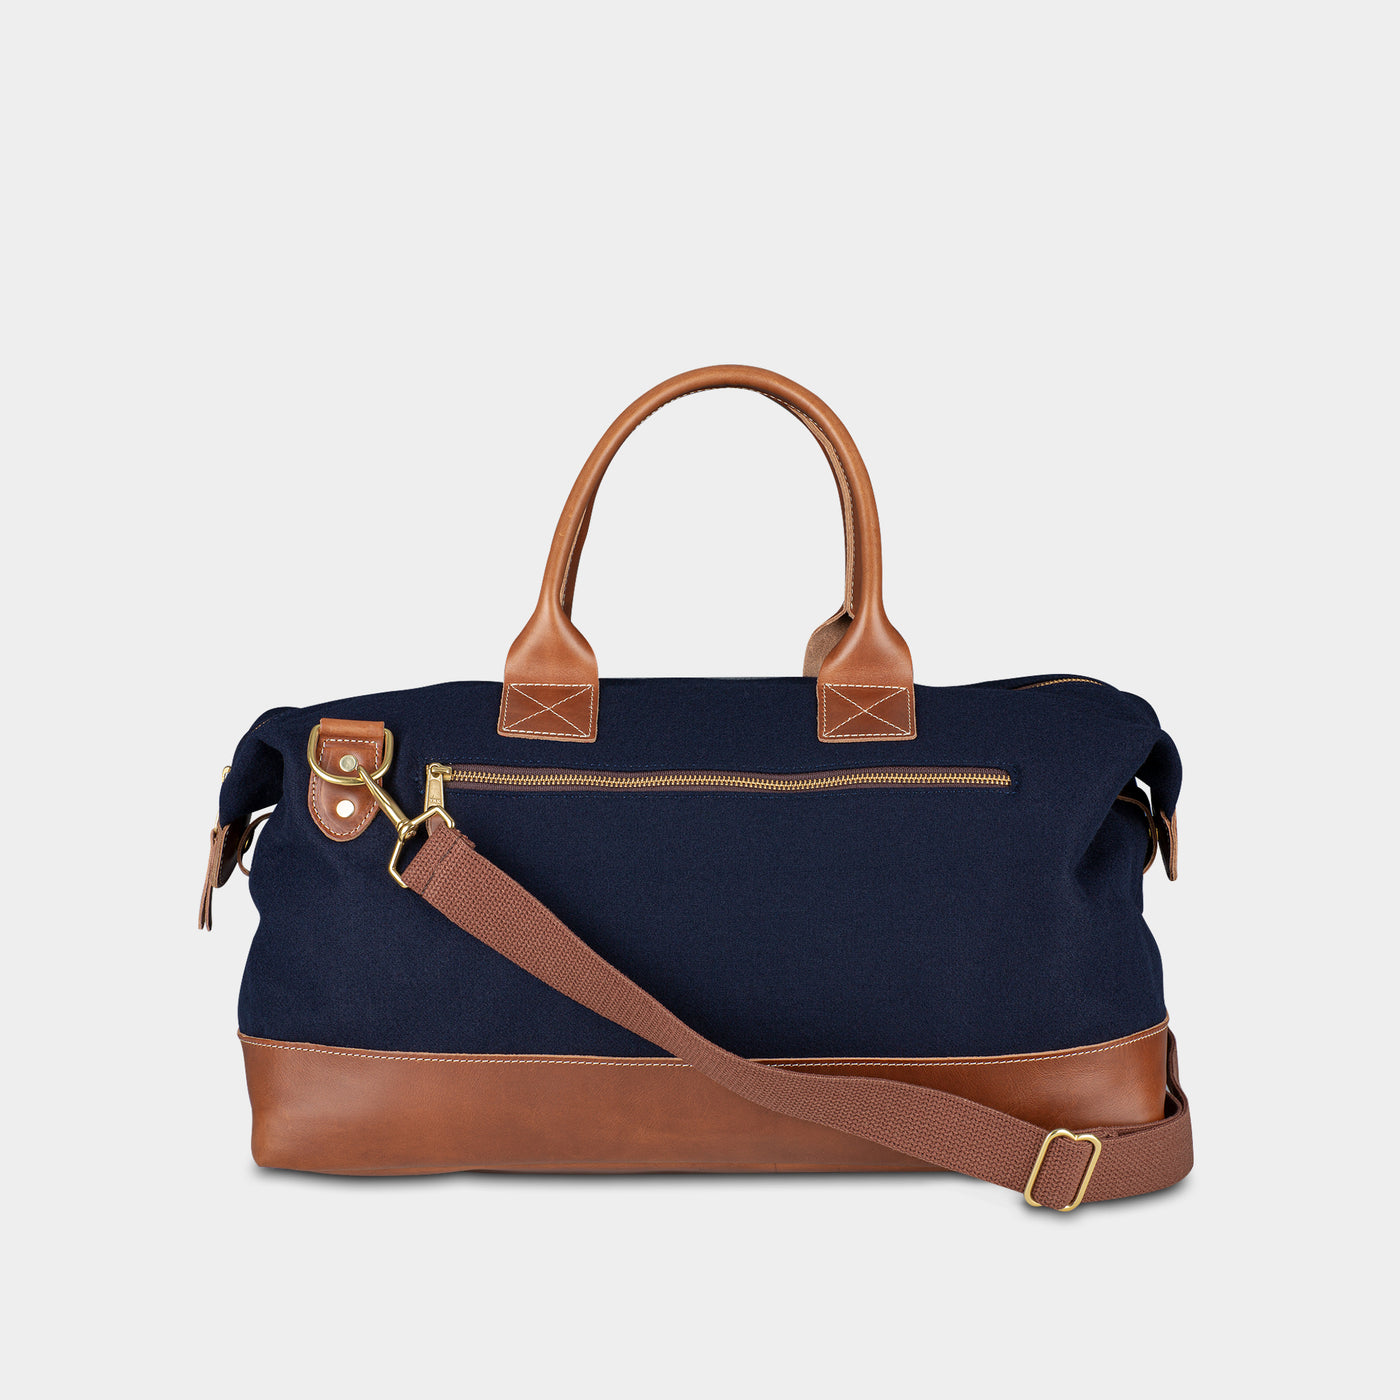 Penn State "Nittany Lion" Weekender Duffle Bag